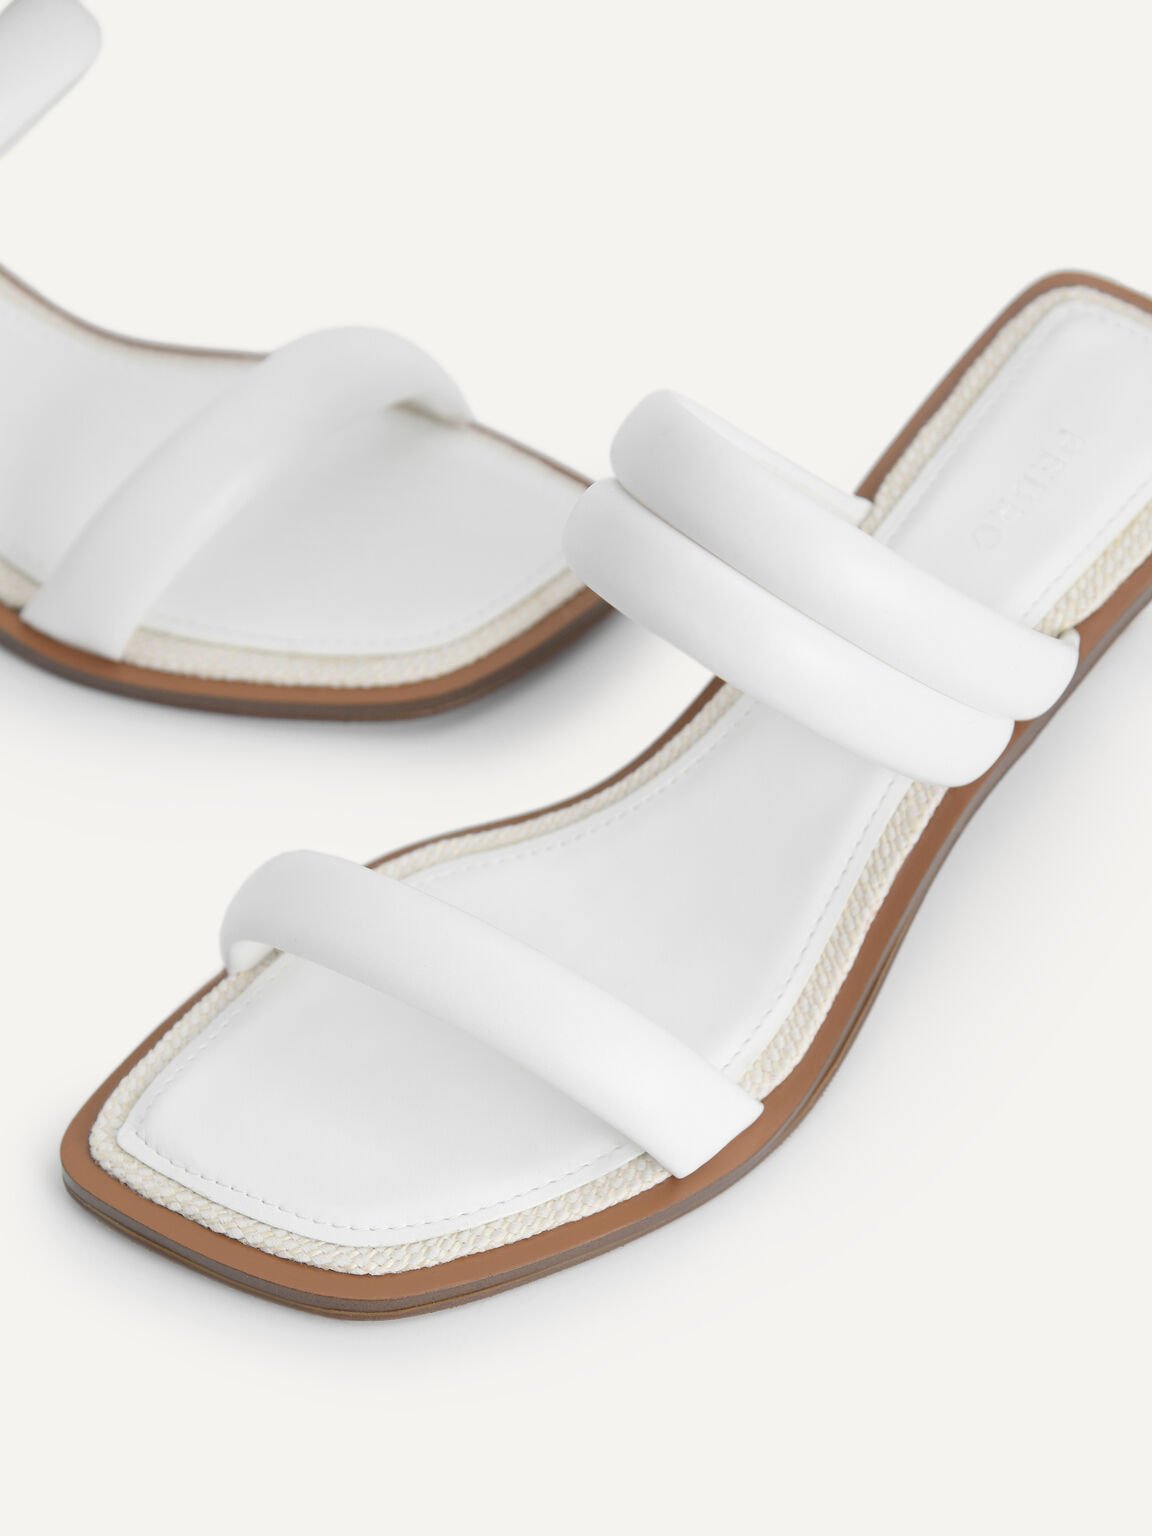 Double Strap Heel Sandals, White